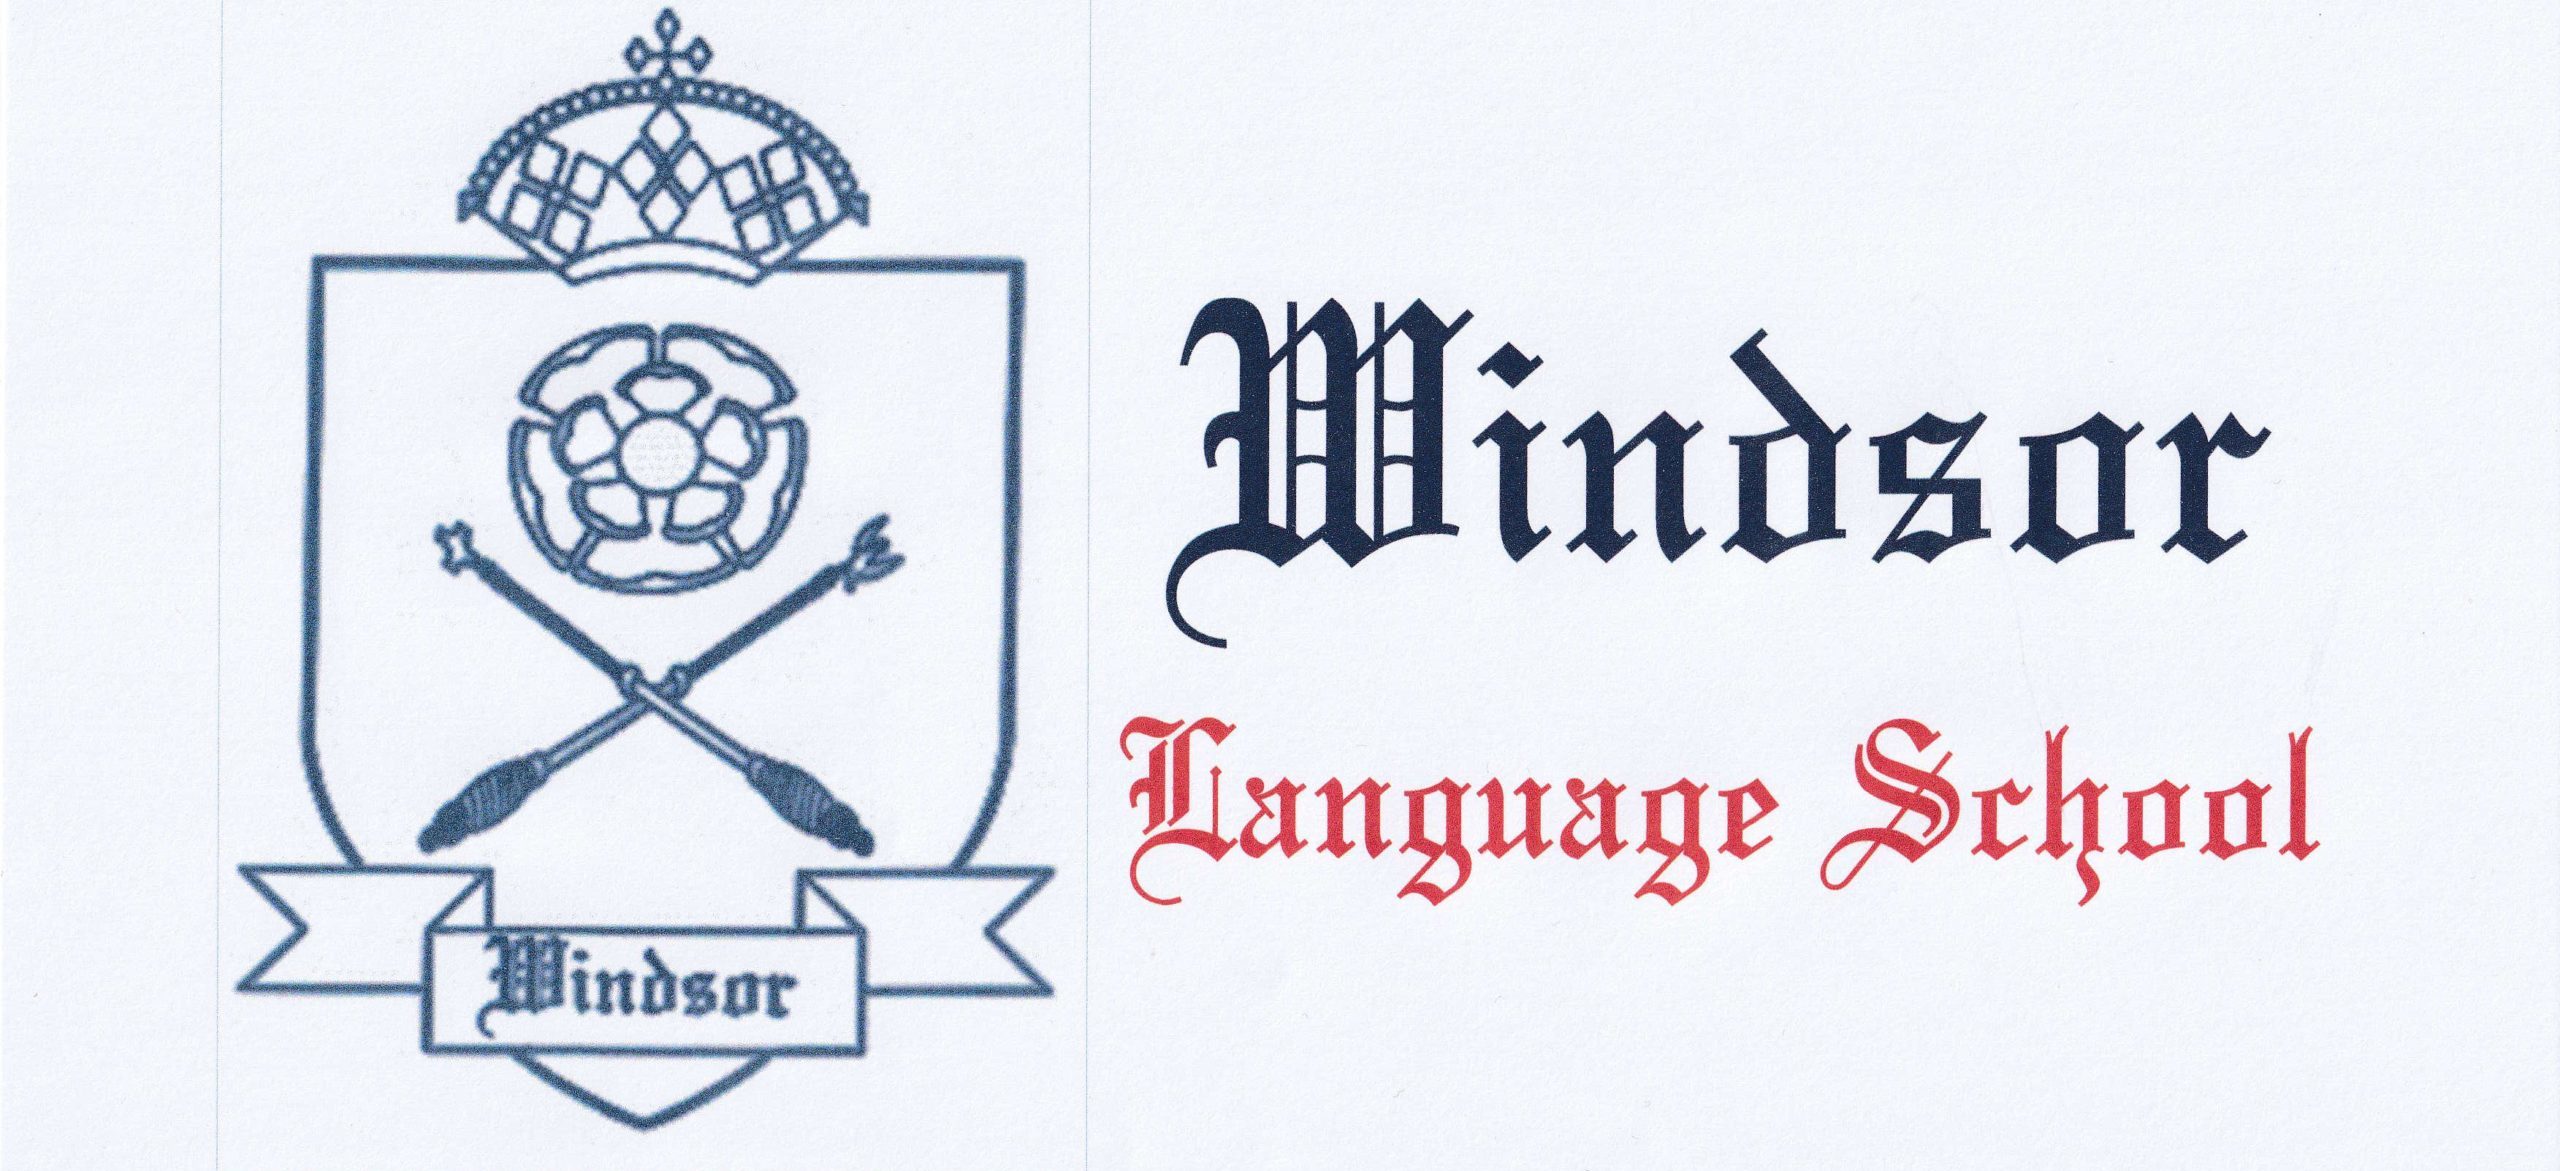 WINDSOR LANGUAGE SCHOOL